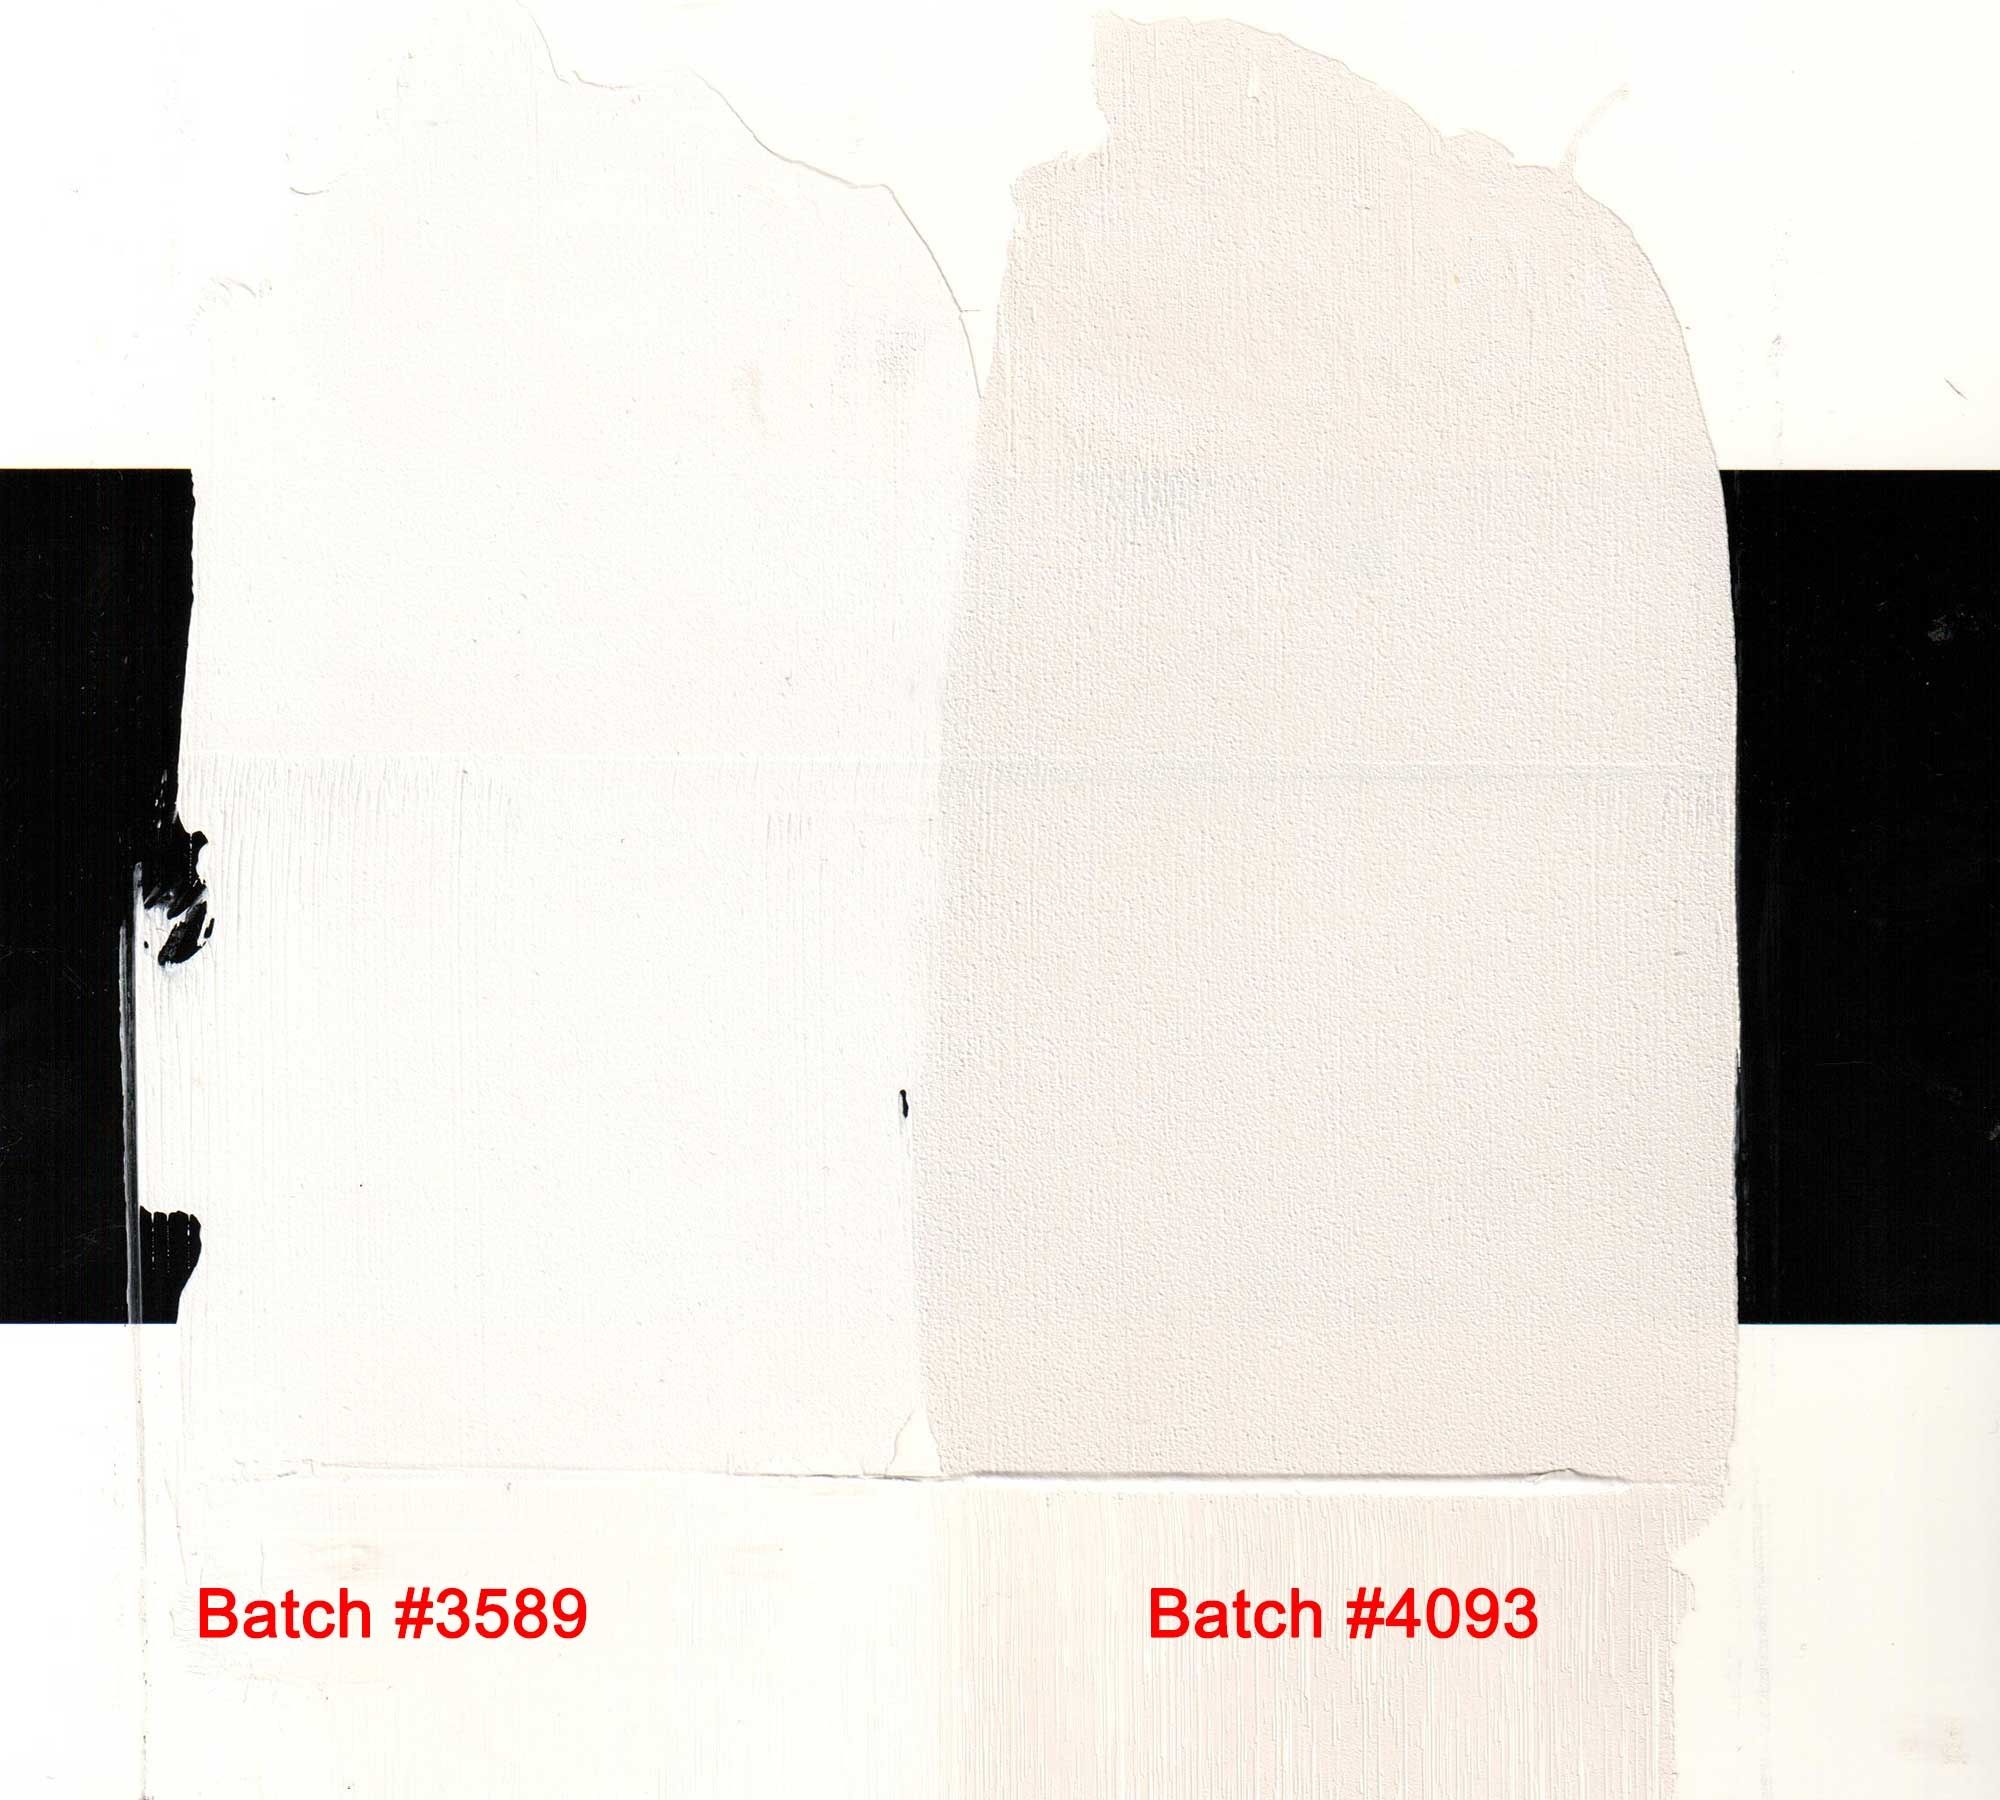 Drawdown of Batch 4093 and standard stack process flake white